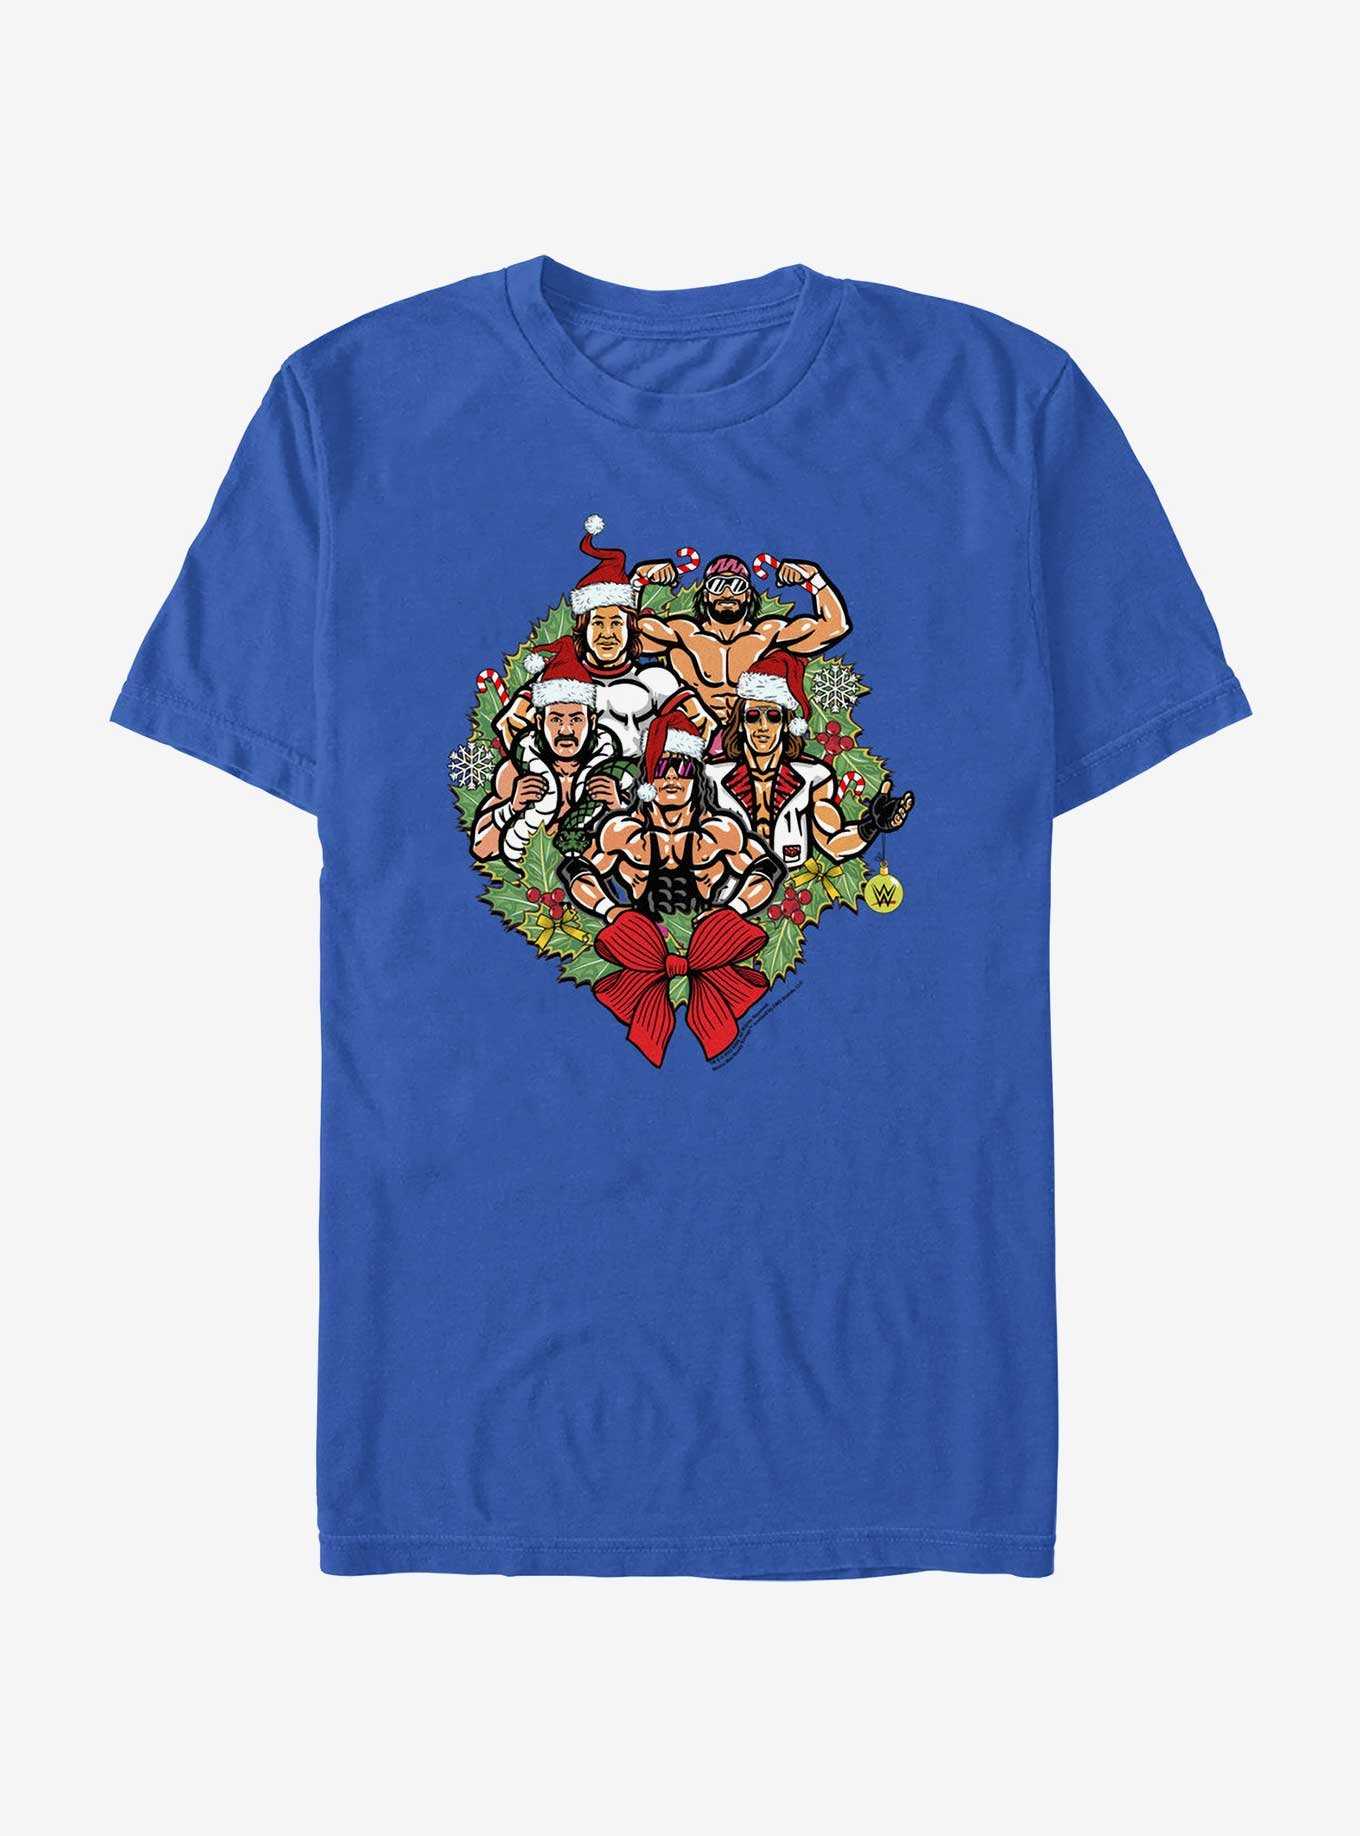 WWE Holiday Legends Wreath T-Shirt, , hi-res